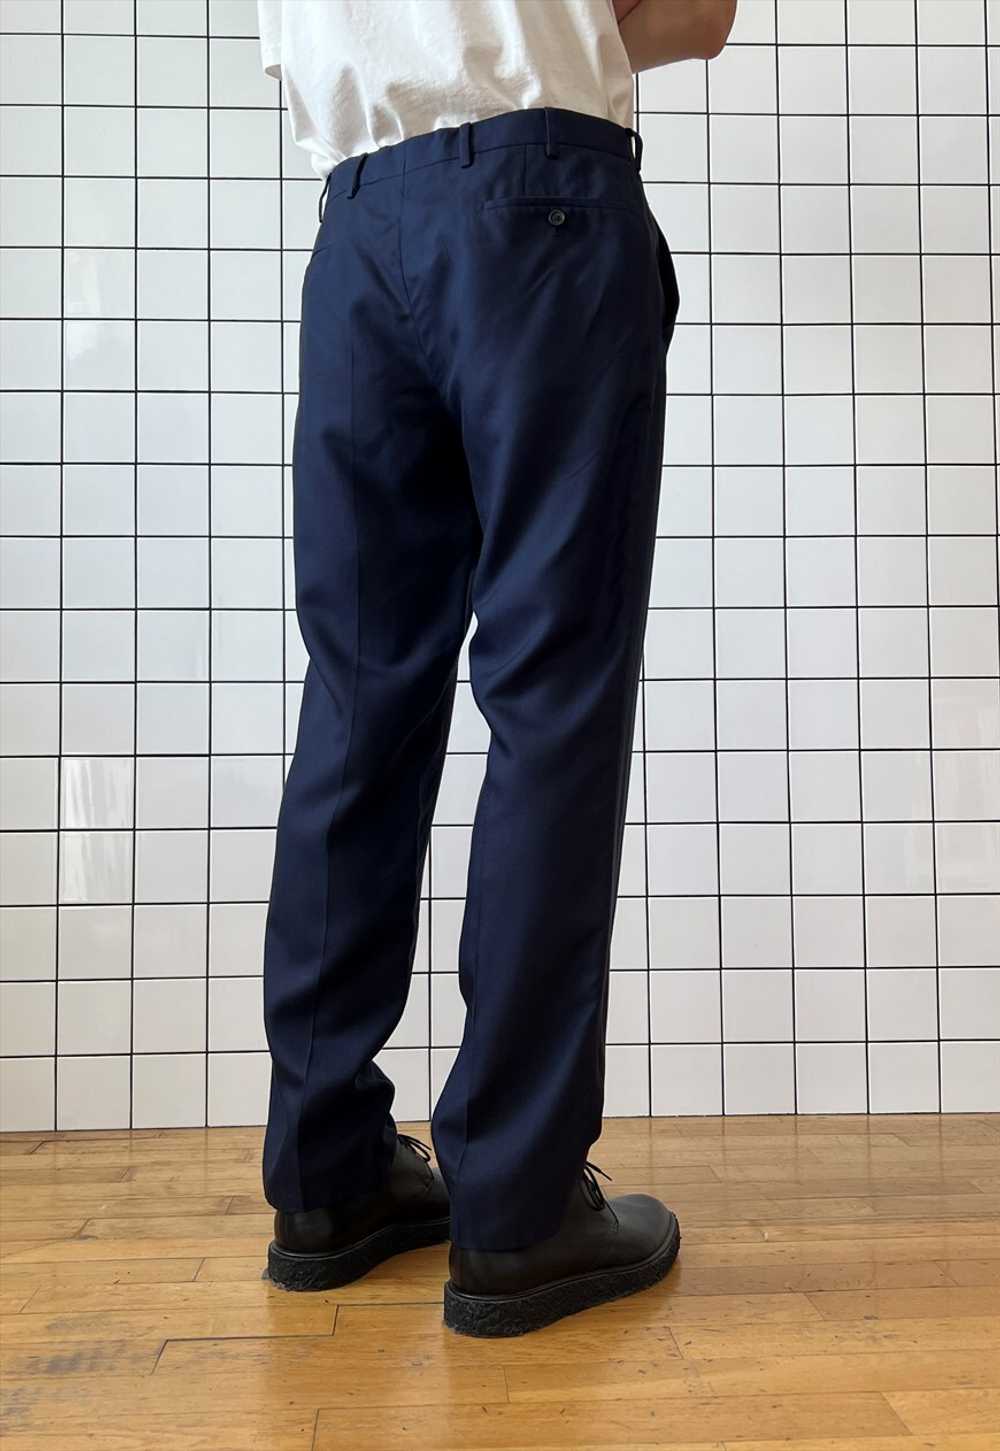 Vintage PRADA Pants Trousers Suit Navy Blue - image 4